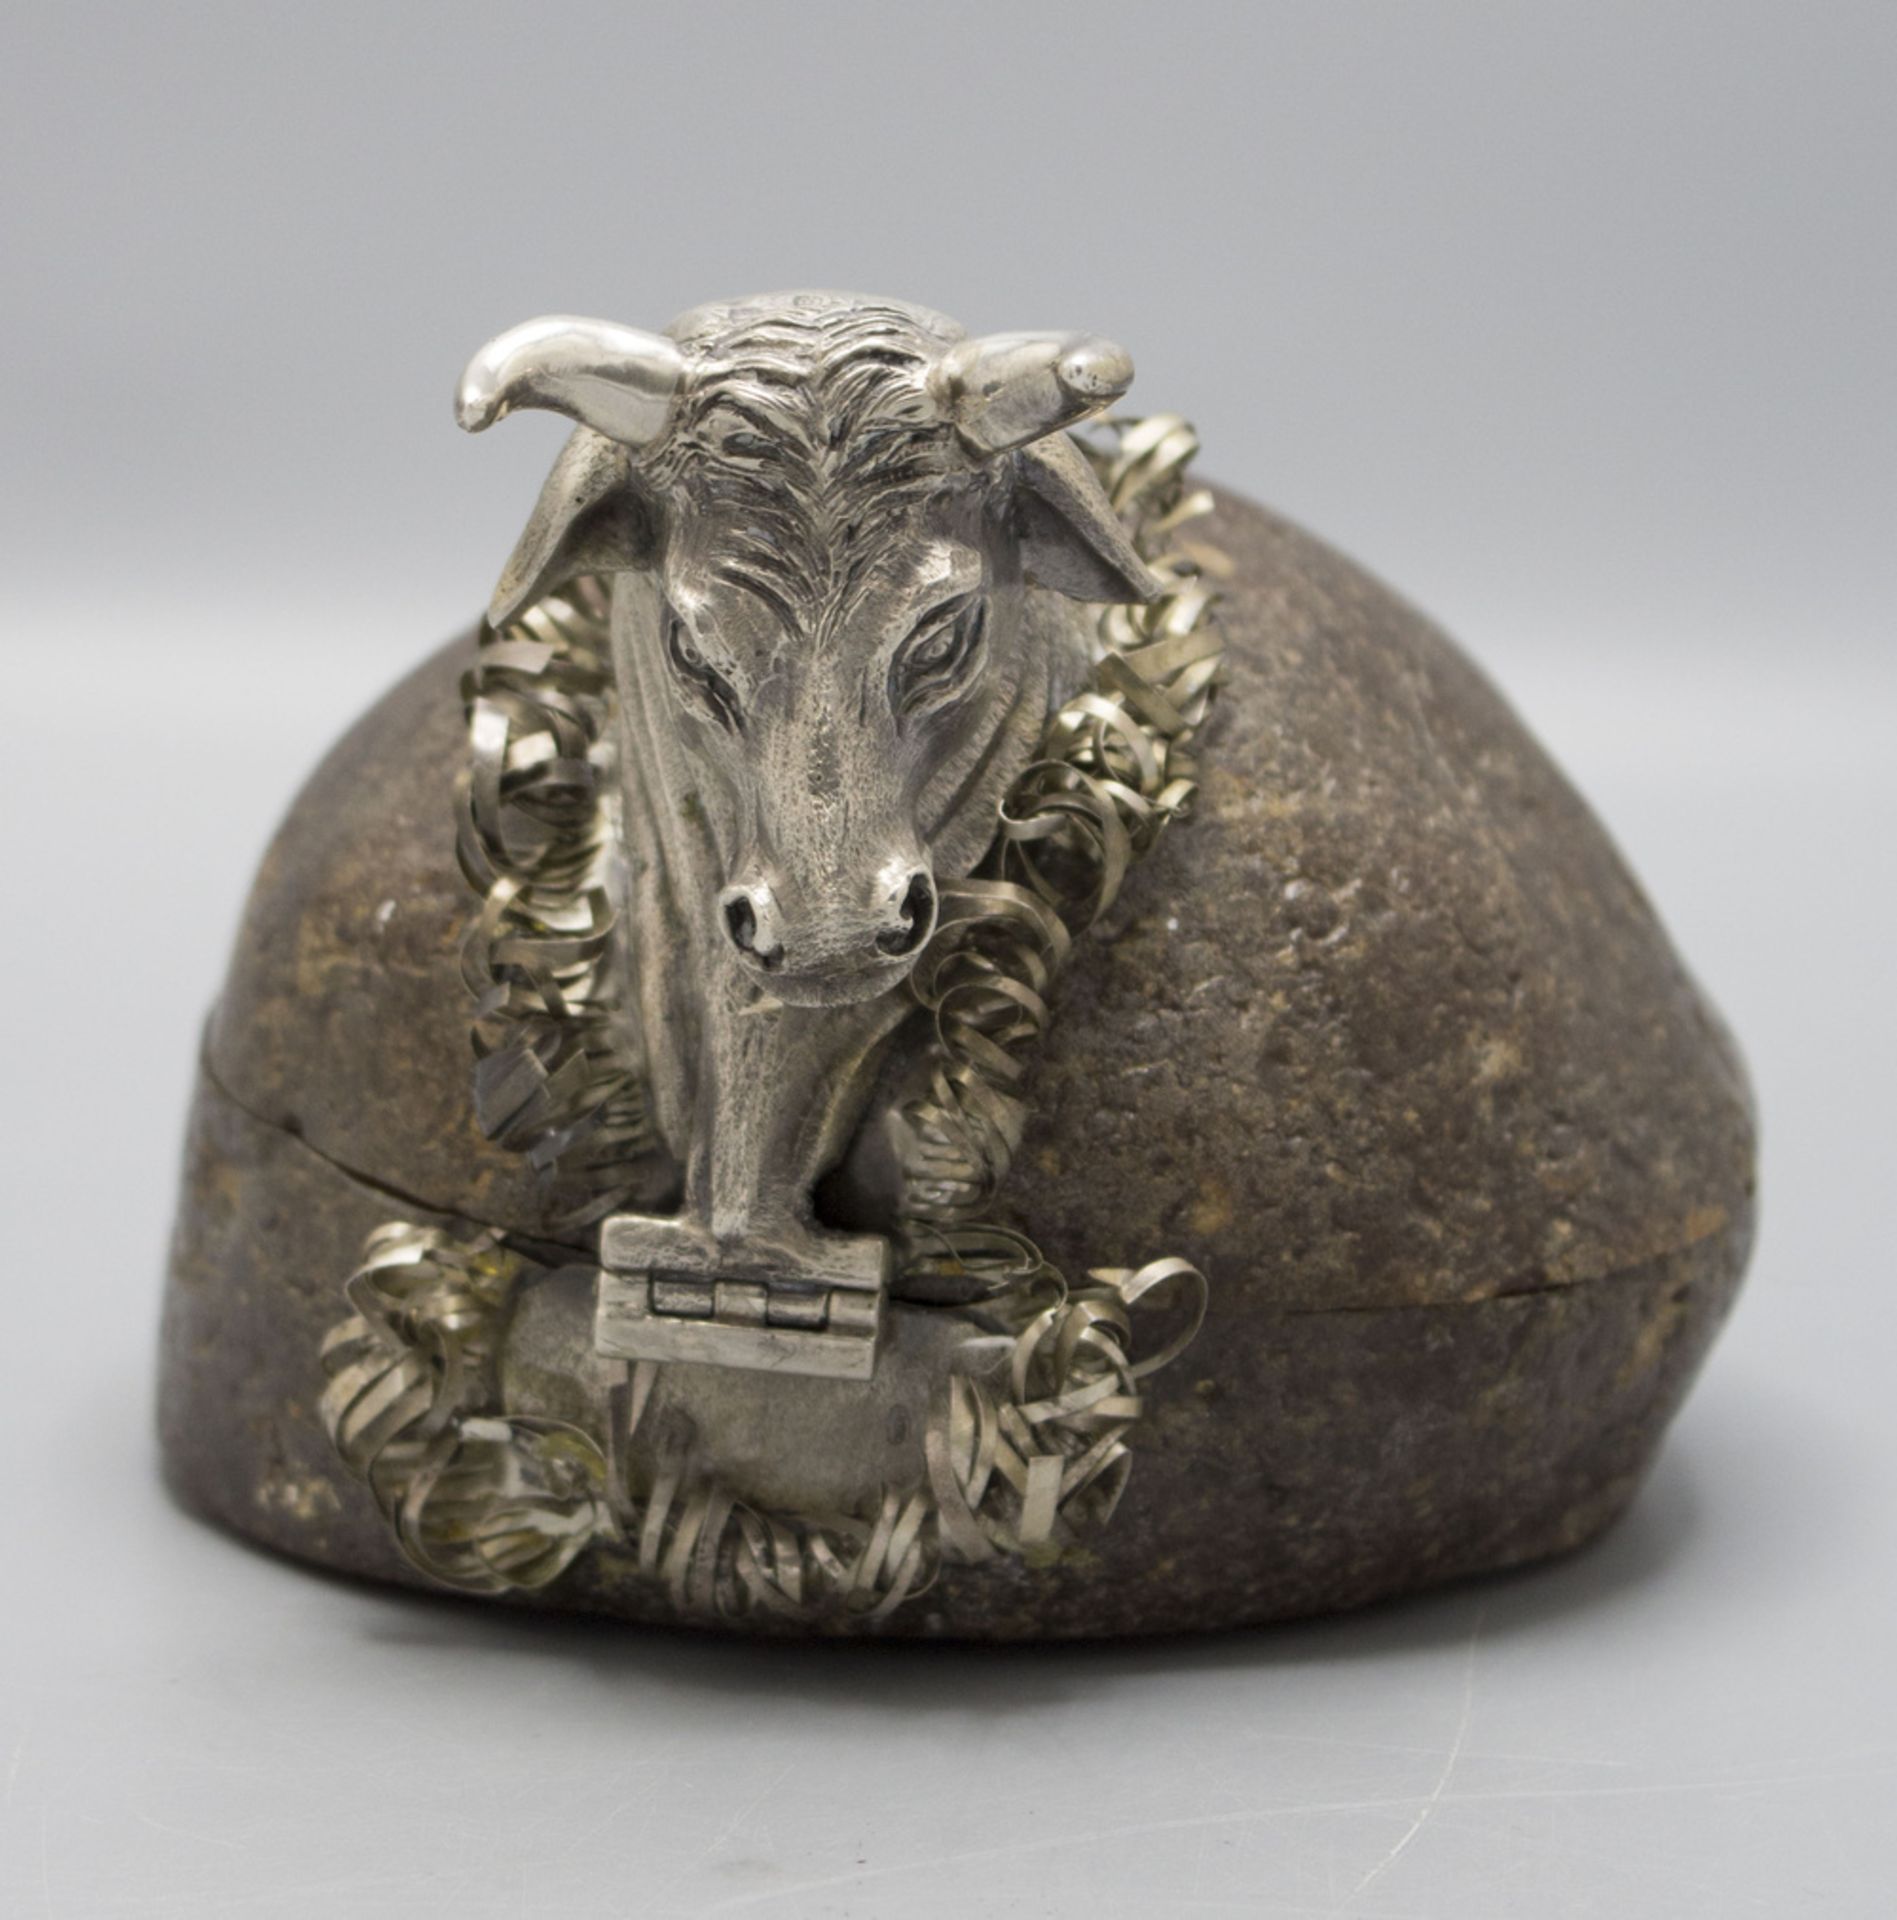 Achat- und Silberskluptur 'Stier' / An agate and silver sculpture of a bull, wohl Gabriele De ... - Bild 2 aus 6